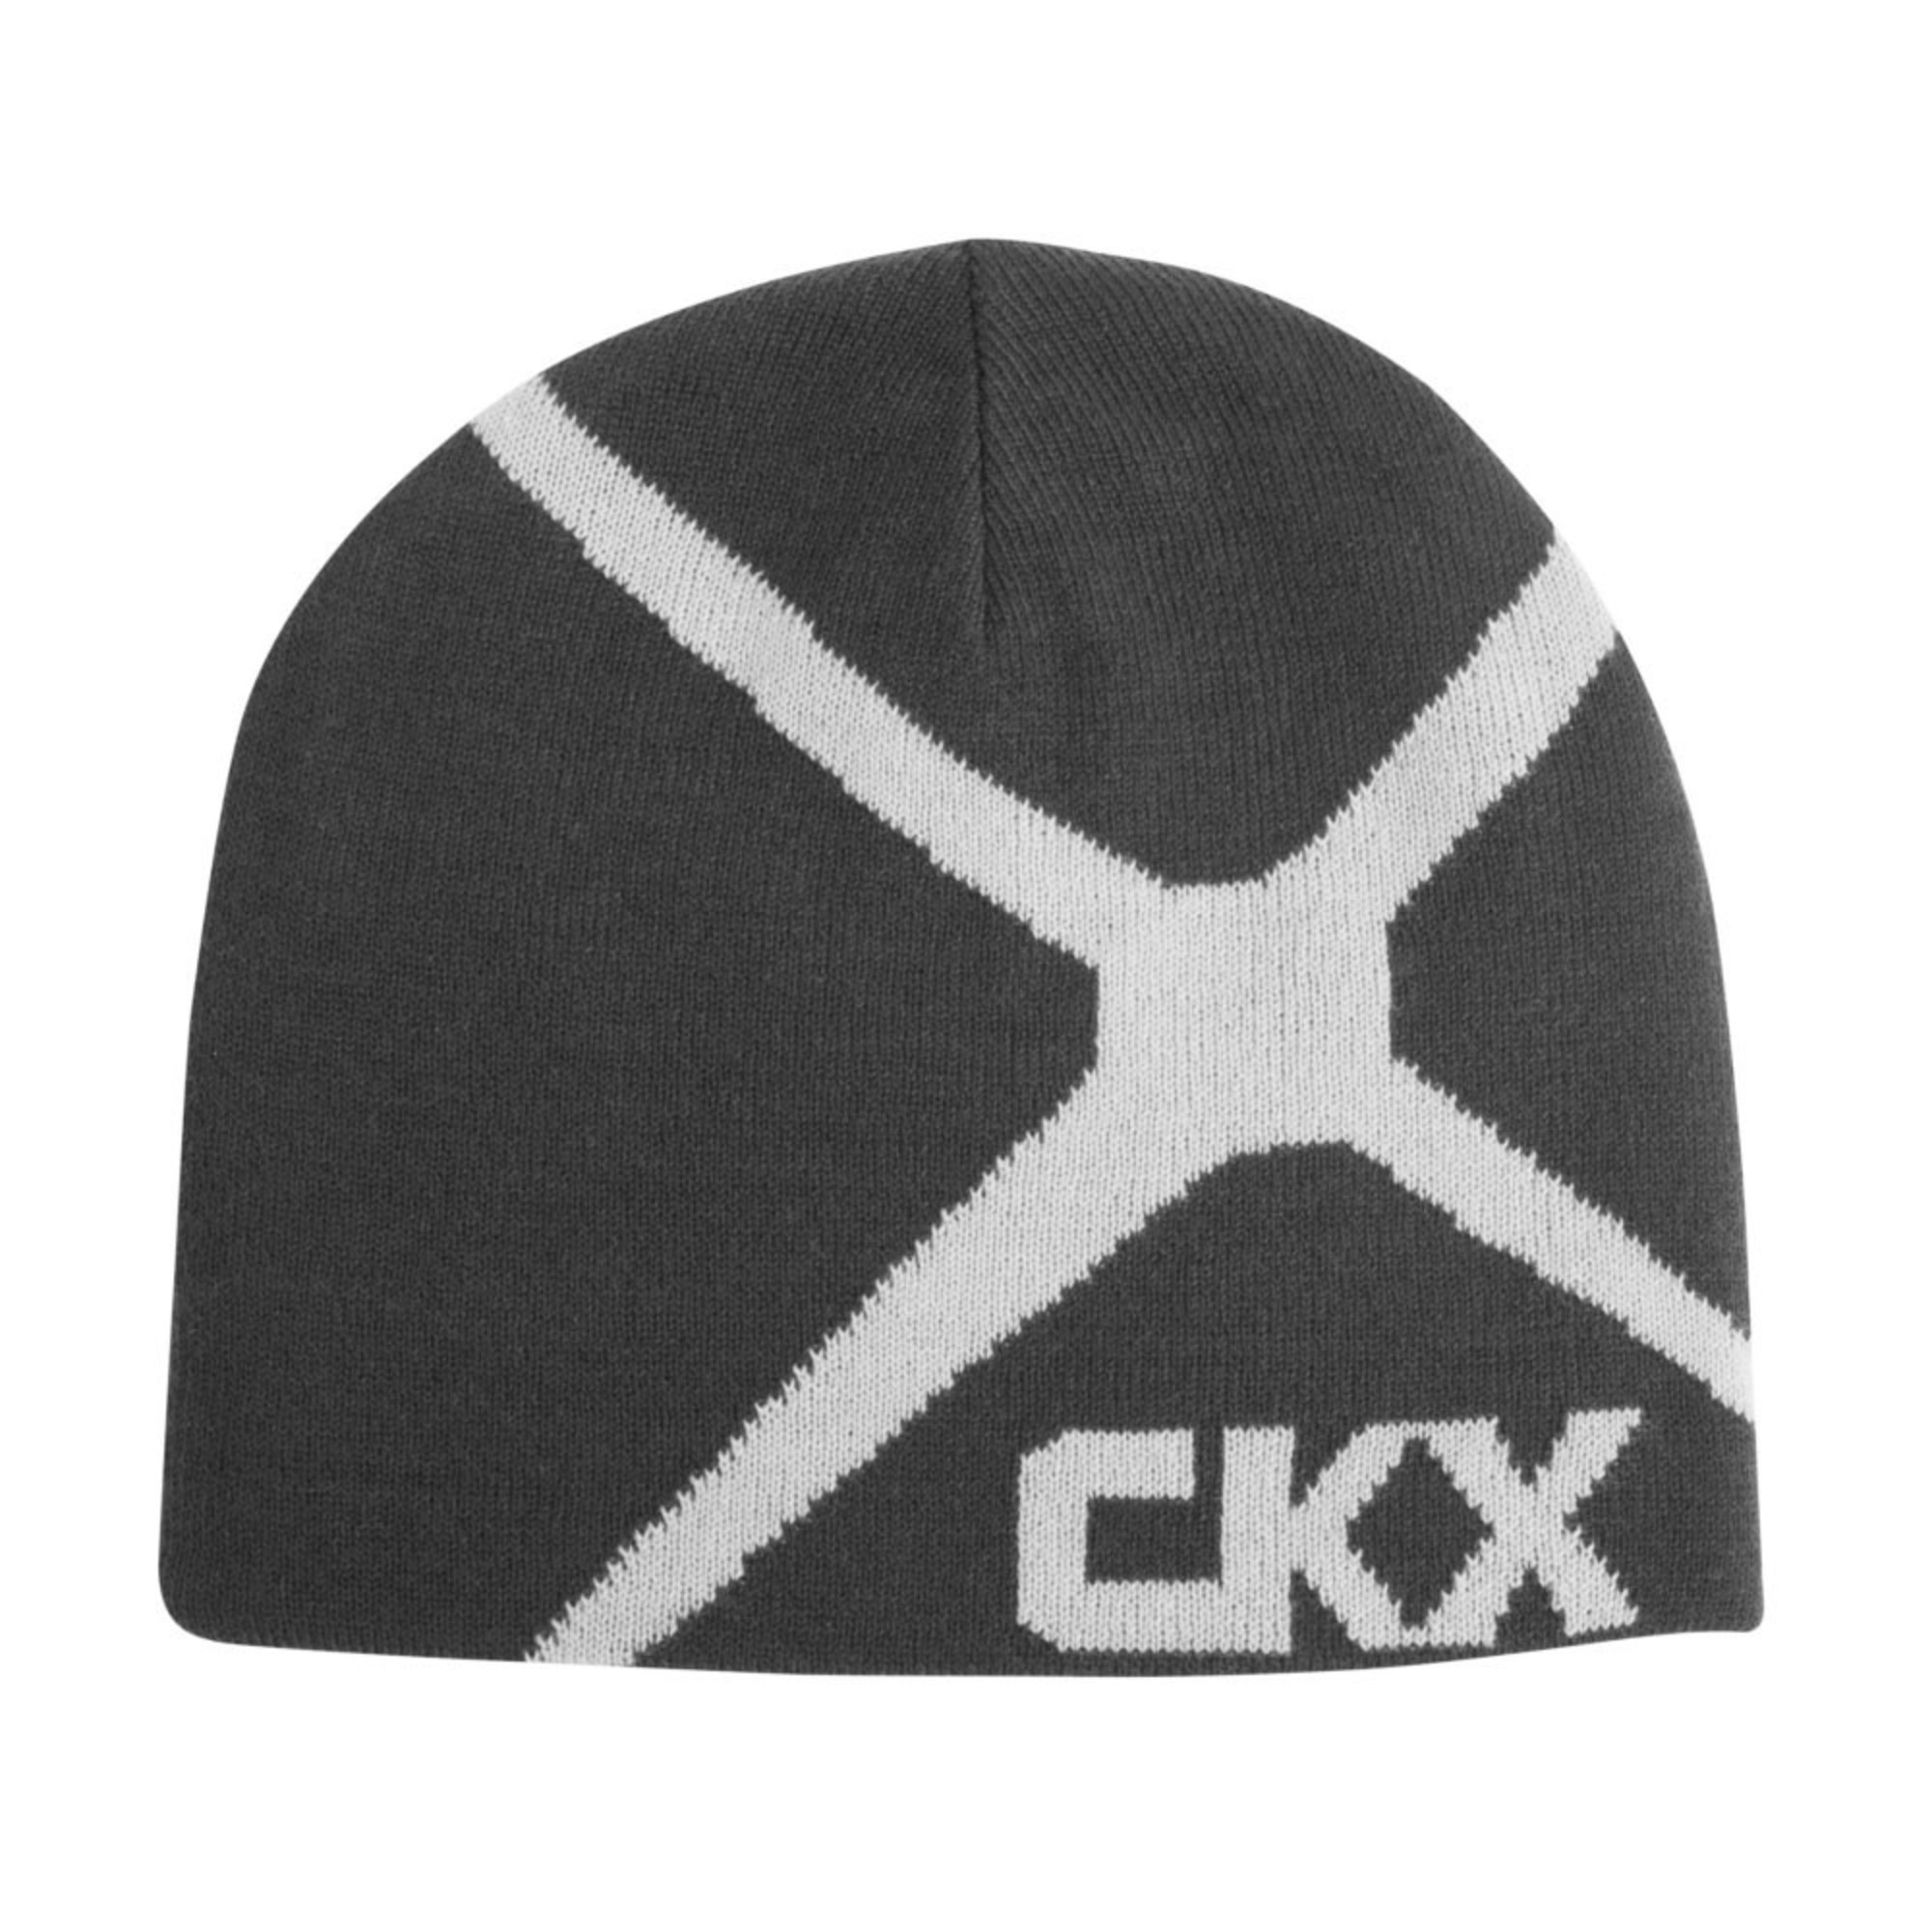 ckx beanie headwear adult jack reversible